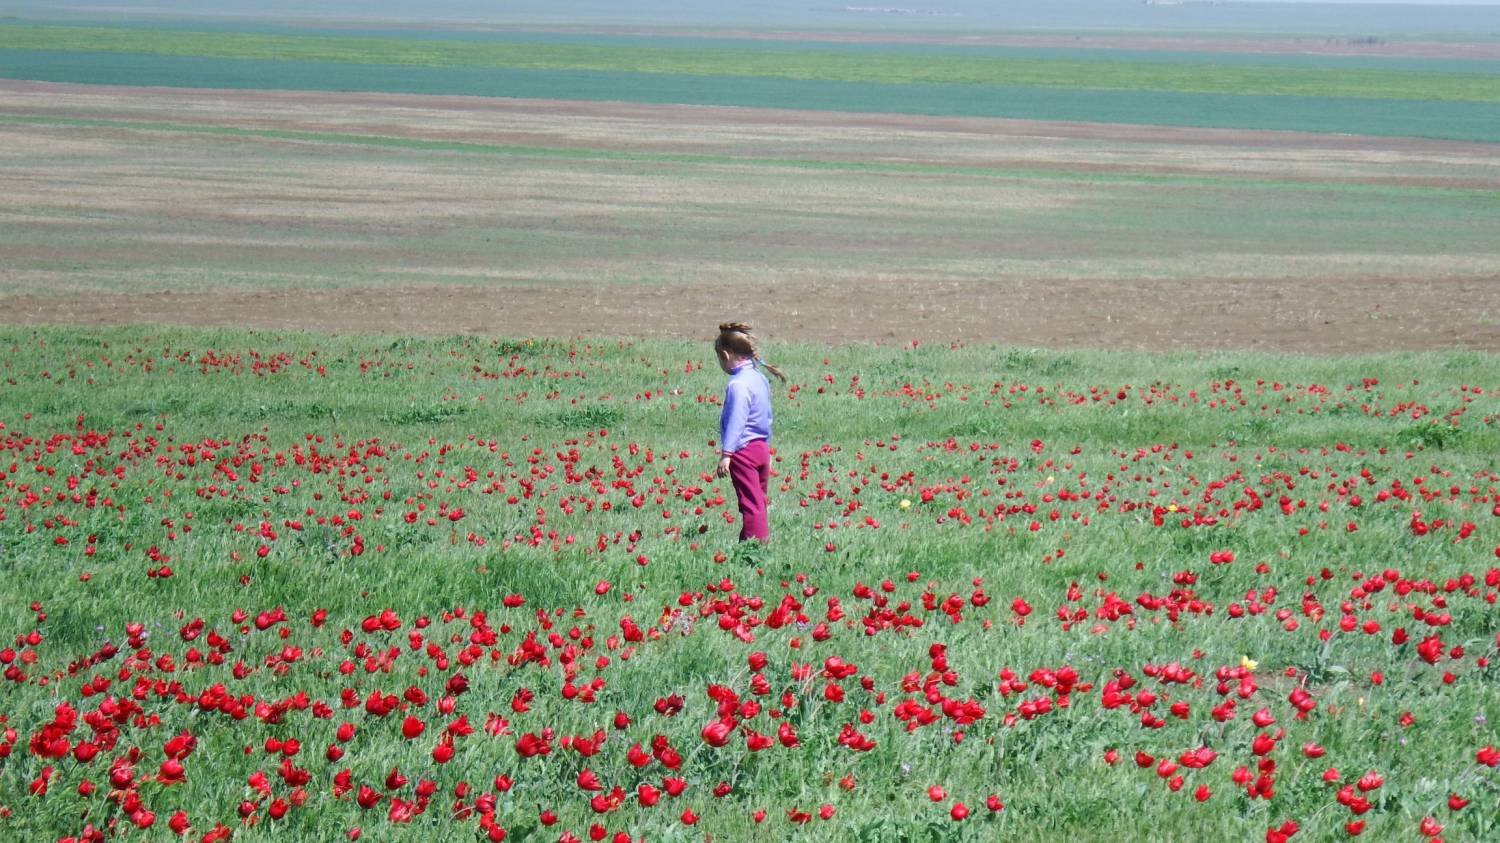 Тюльпаны в степи Казахстана